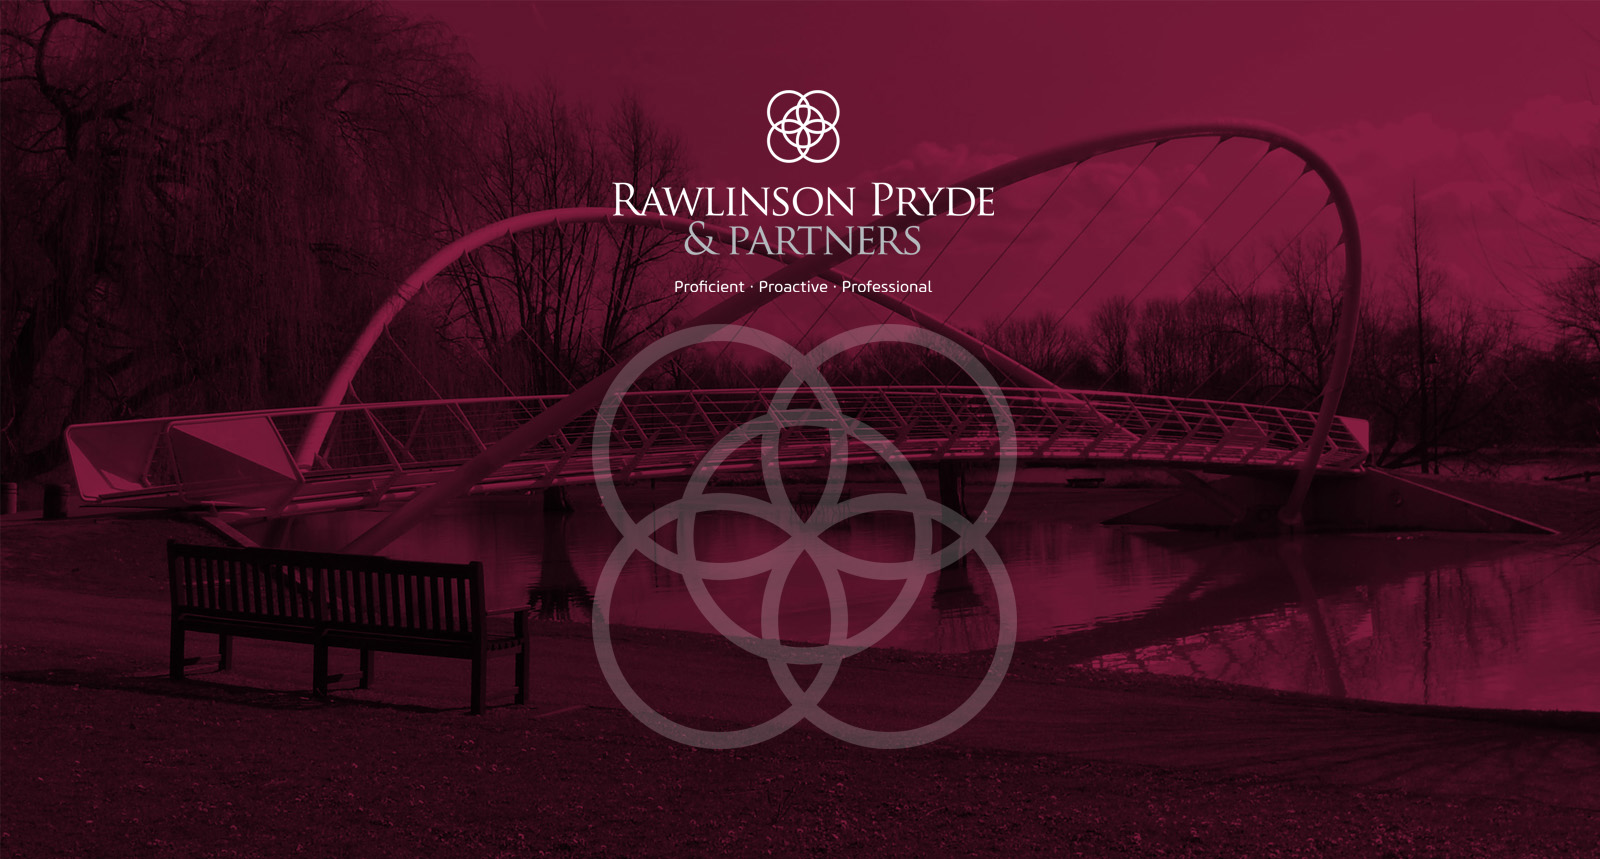 Rawlinson Pryde & Partners - Accountants